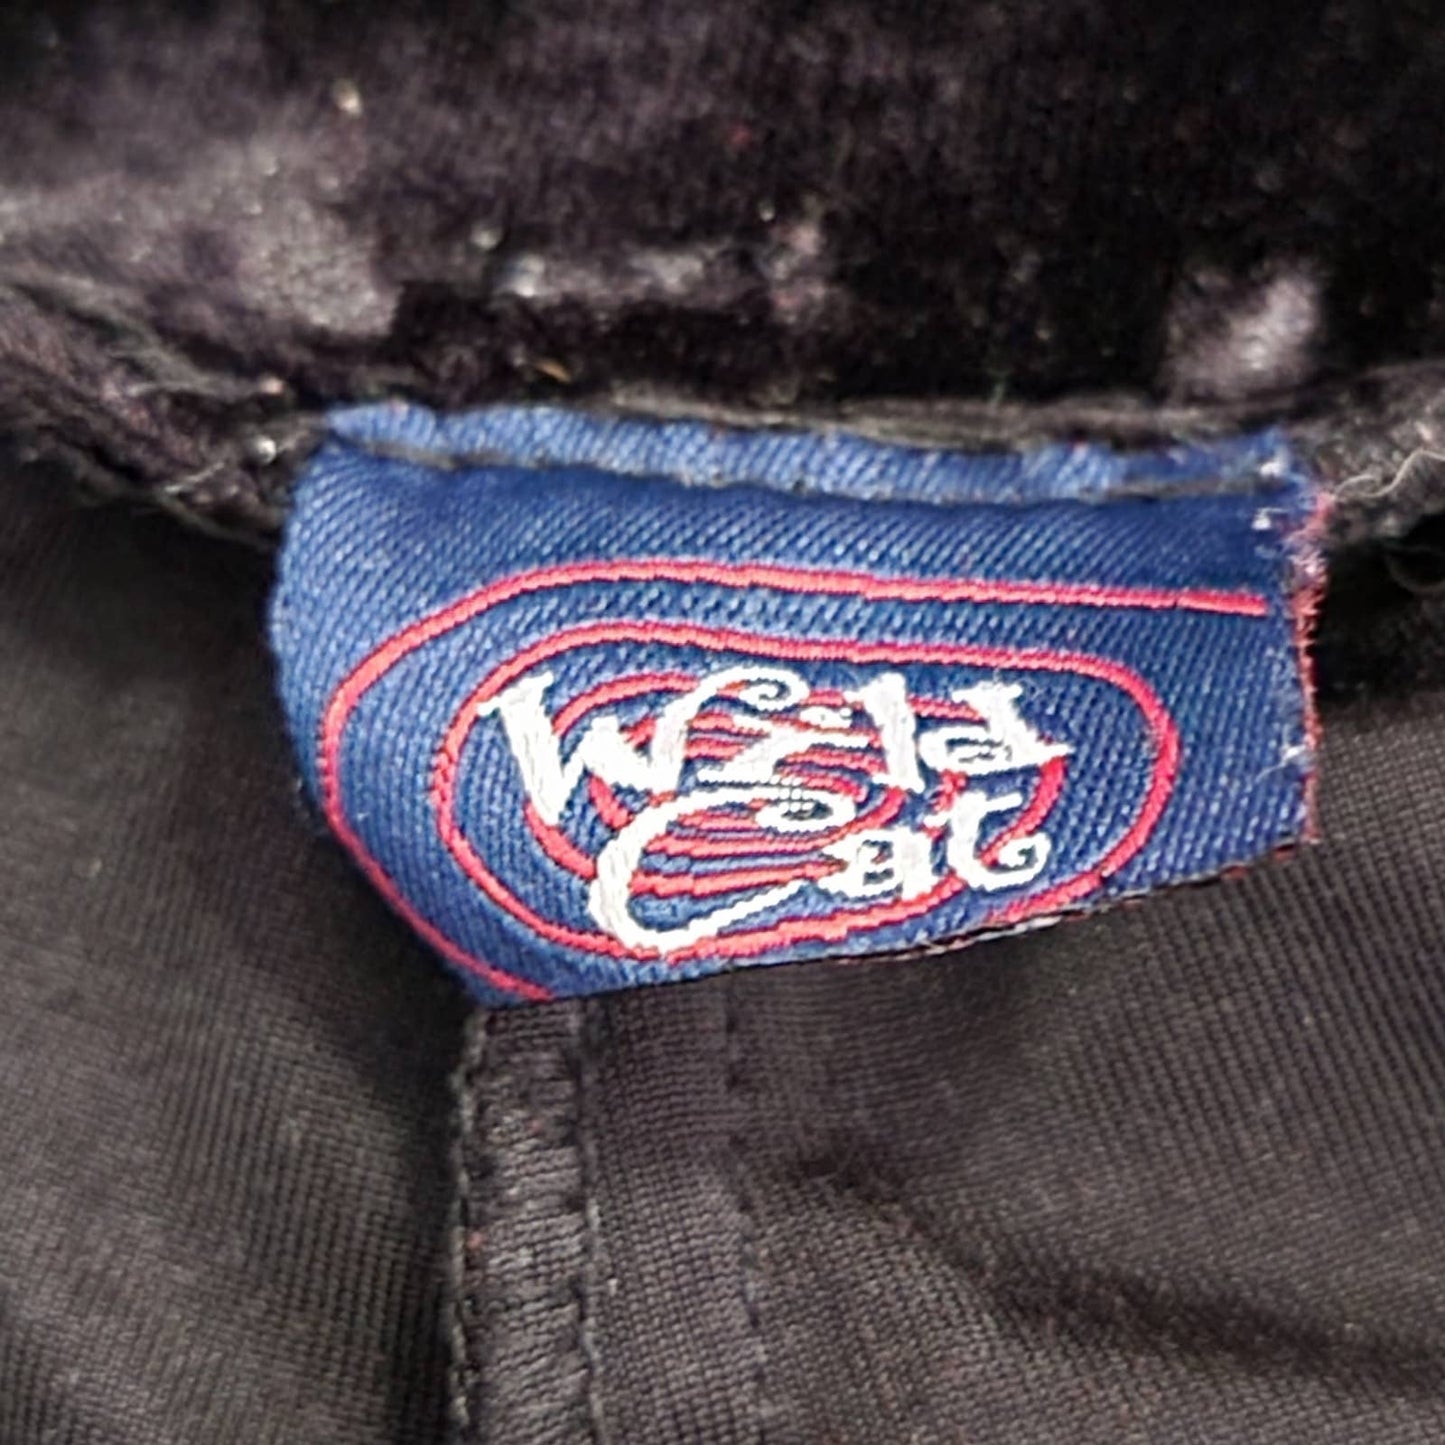 Vintage Y2k Low Rise Wide Leg Velour Pants by WildCat - M